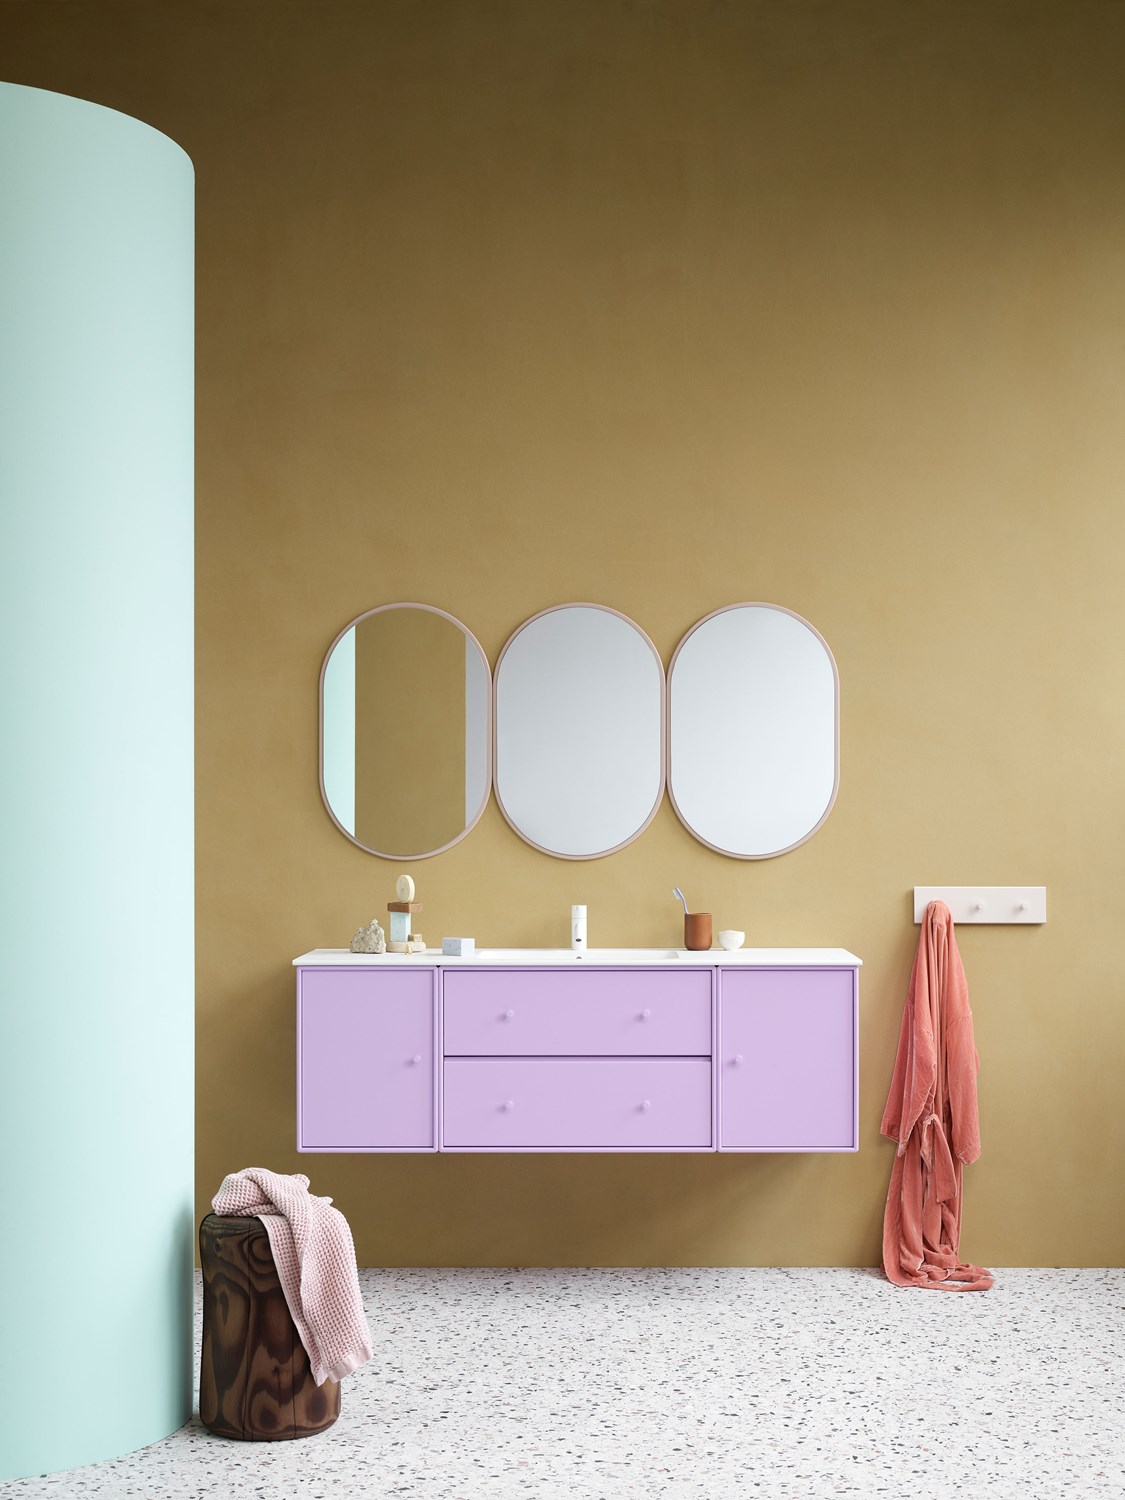 Inspiration for the bathroom | Montana Furniture